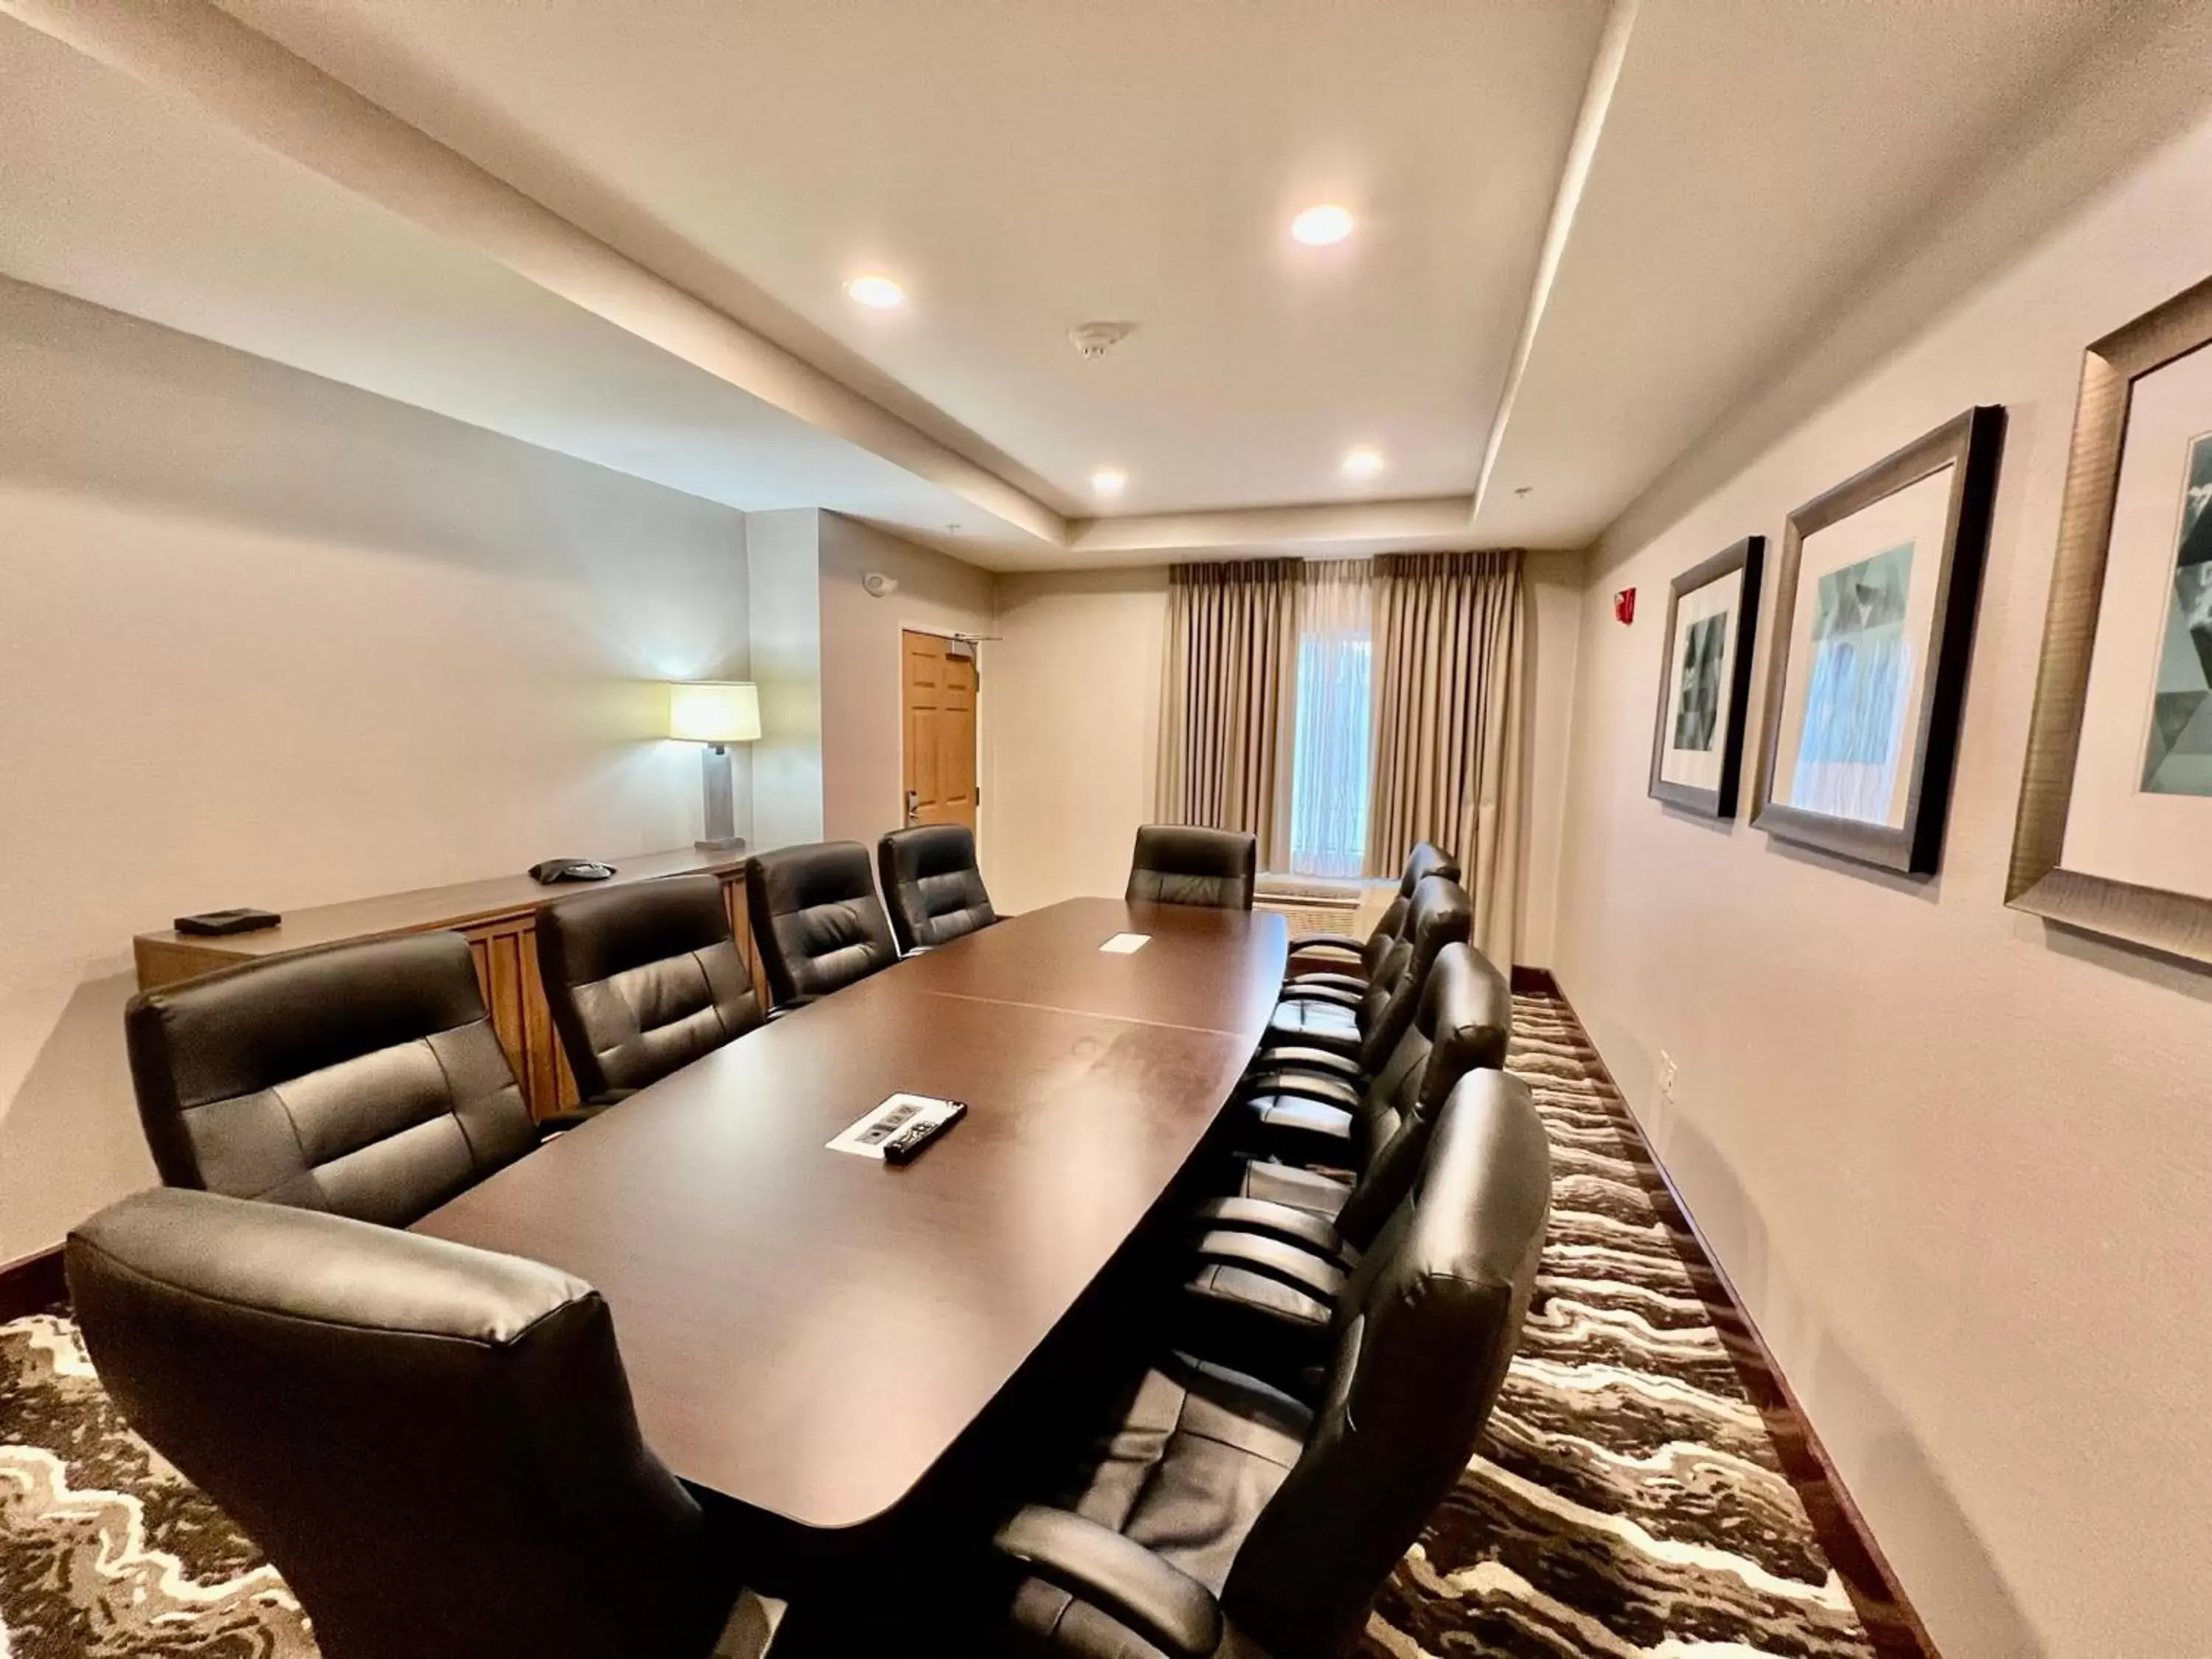 Meeting/conference room in Staybridge Suites Detroit-Novi